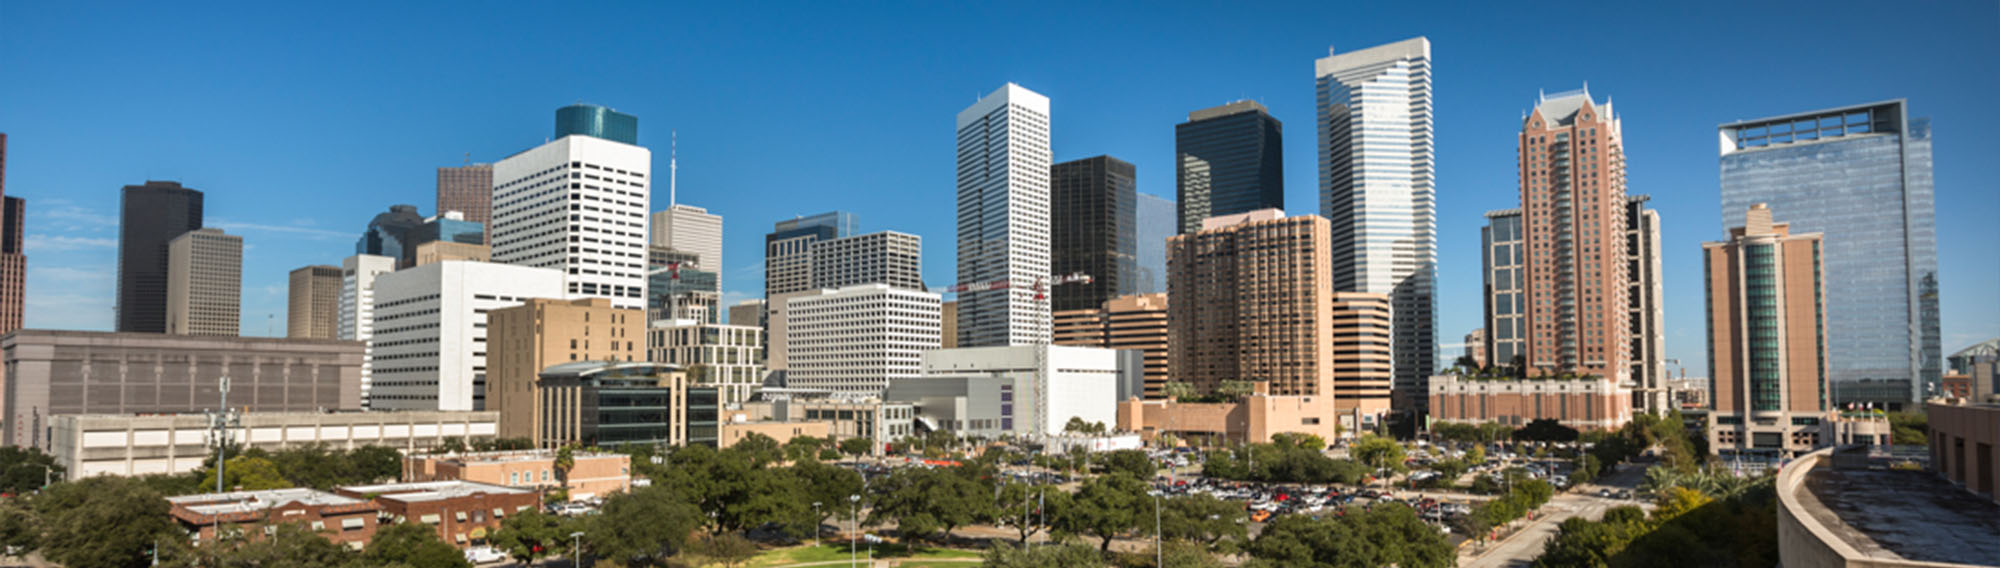 A city scene of Houston, Texas.